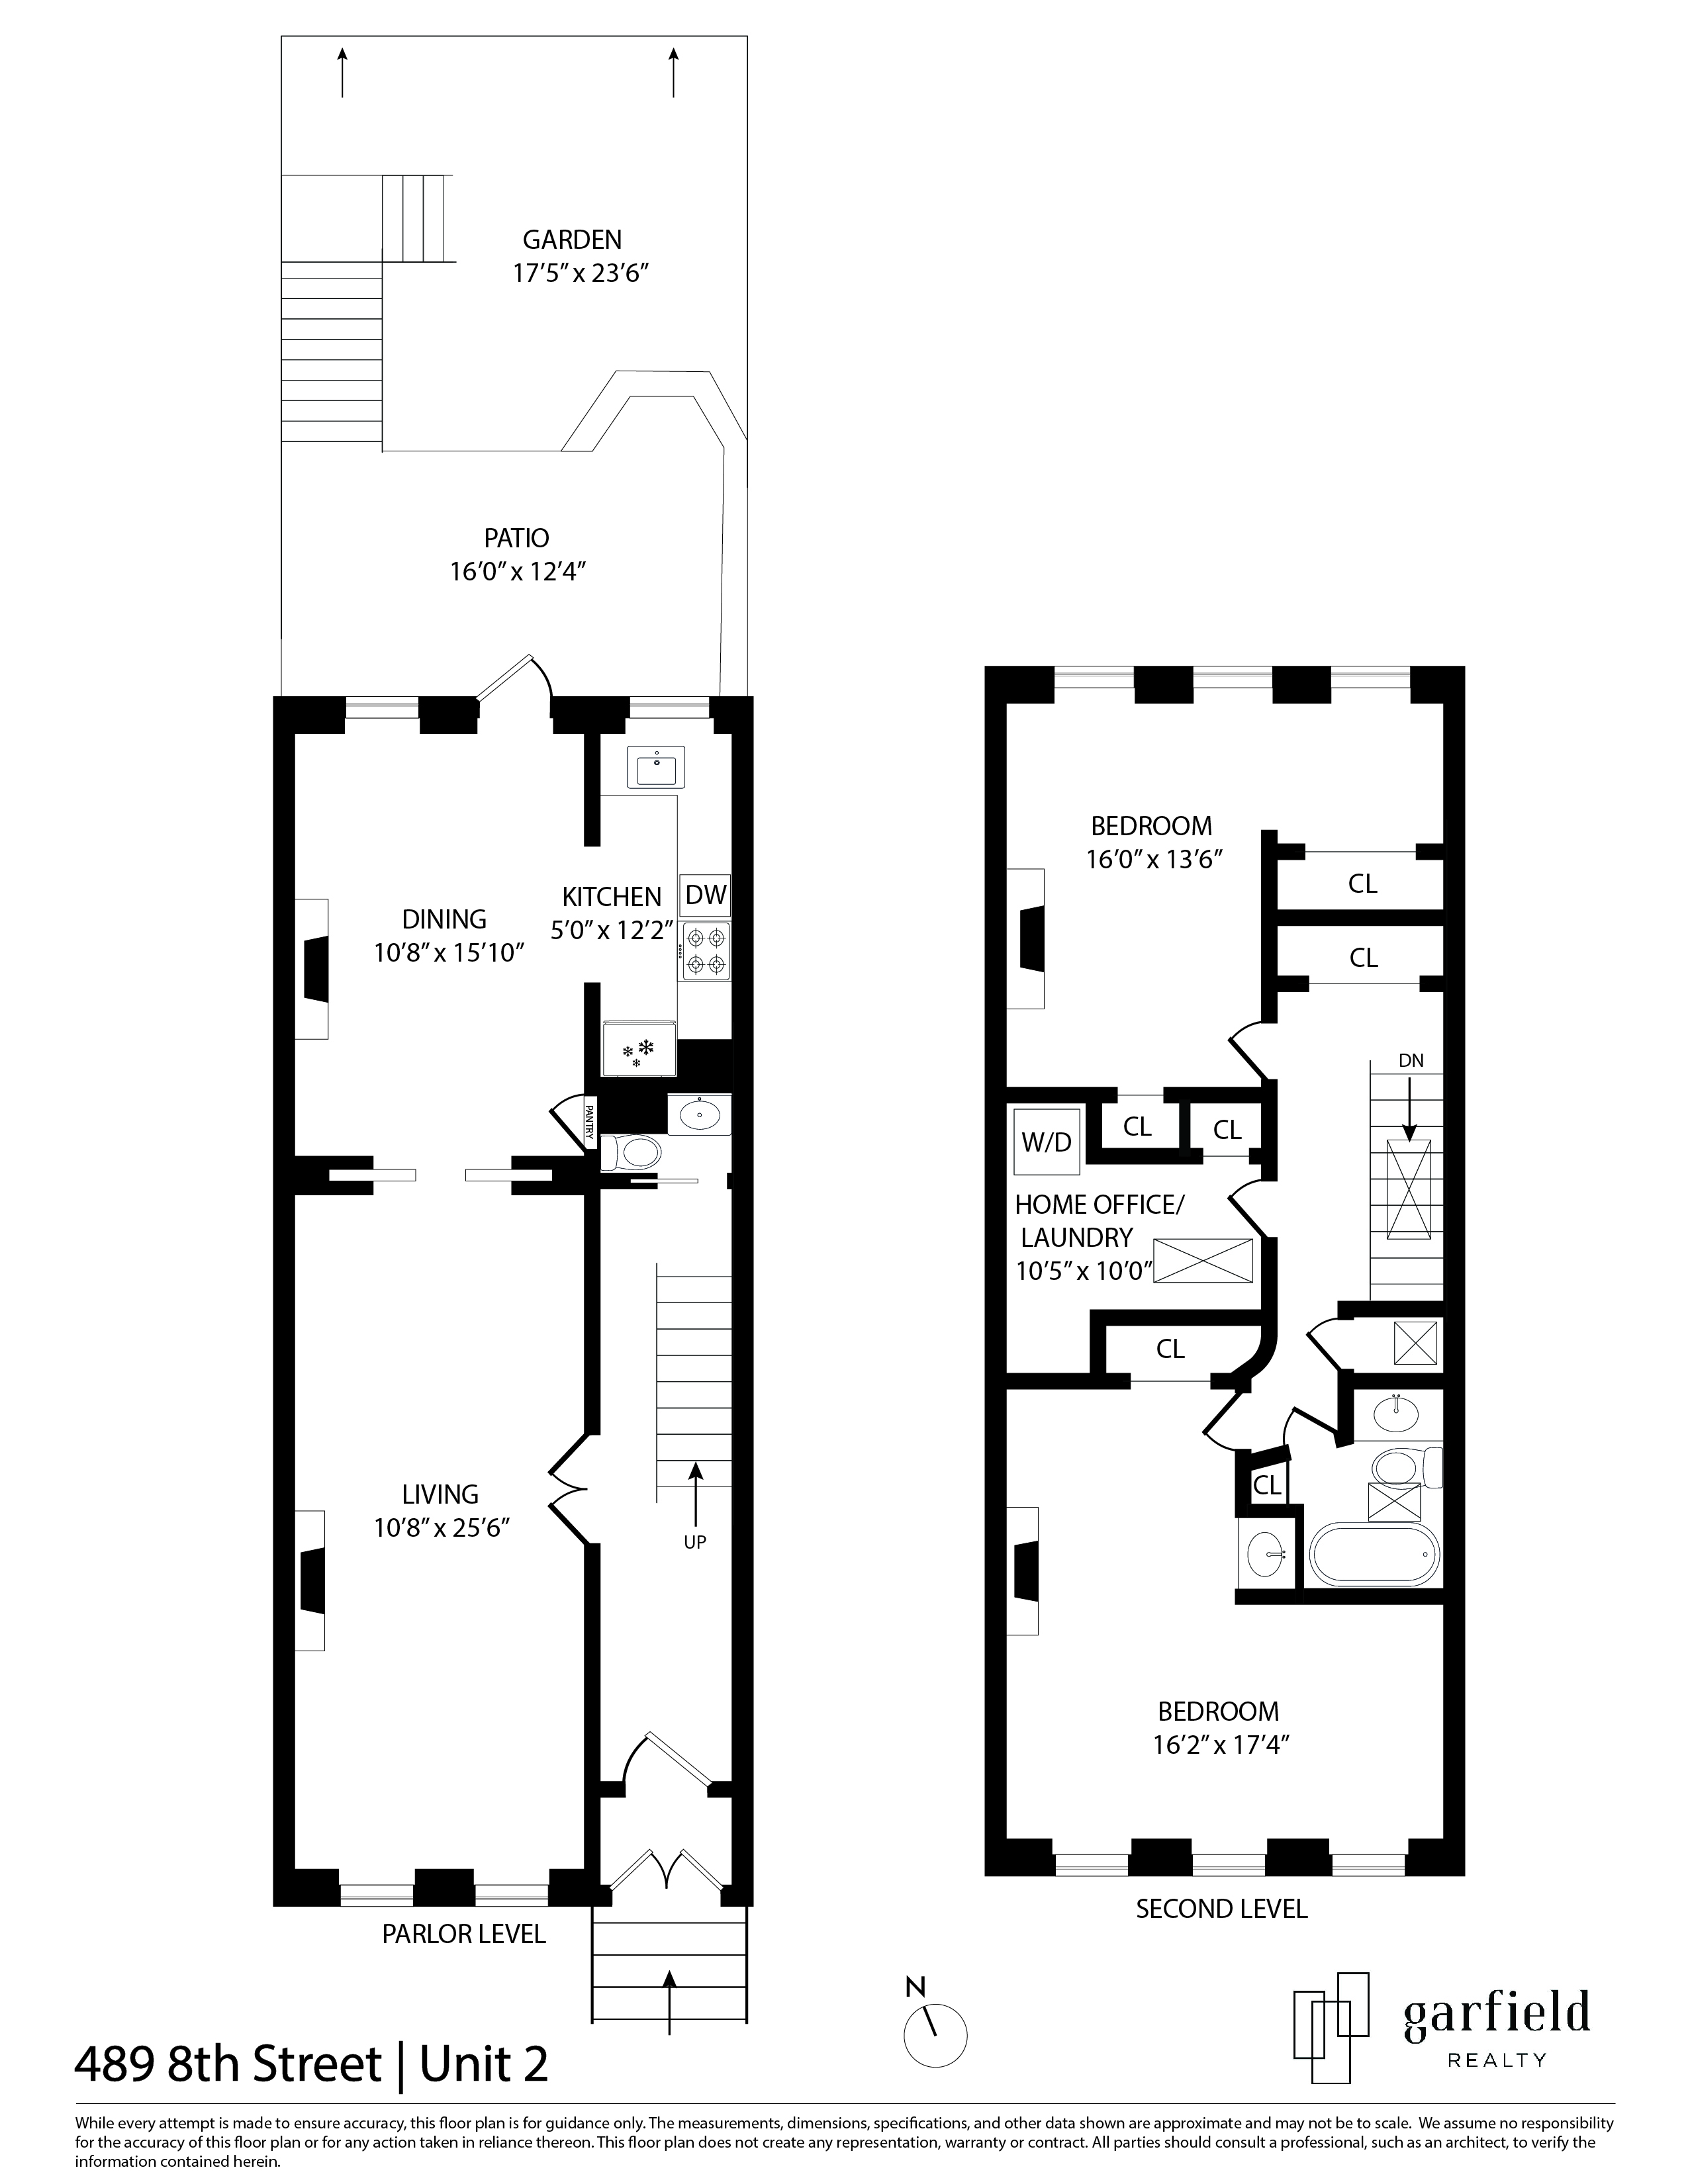 Floorplan of 489 8th St